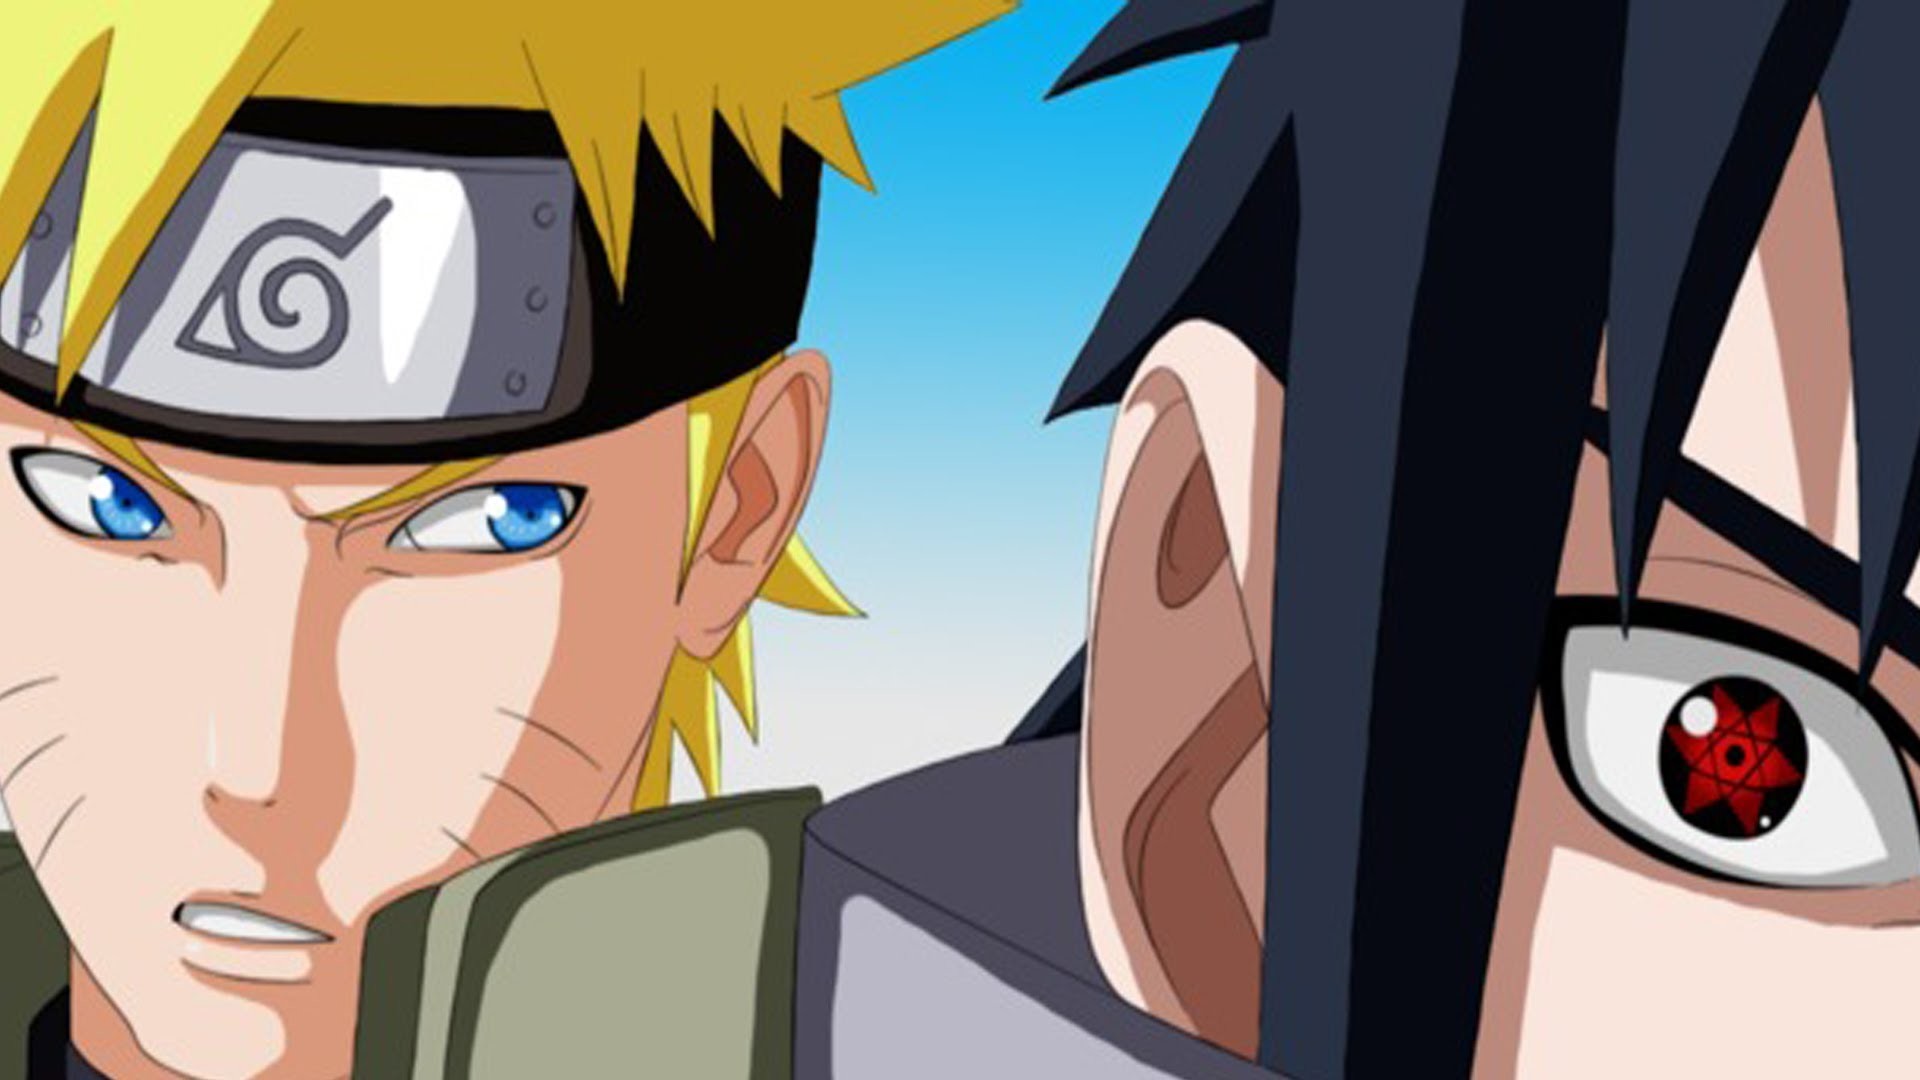 1920x1080 New Naruto Shippuden Movie Coming In 2014 -- Future Naruto Vs Sasuke  Possibly? - YouTube